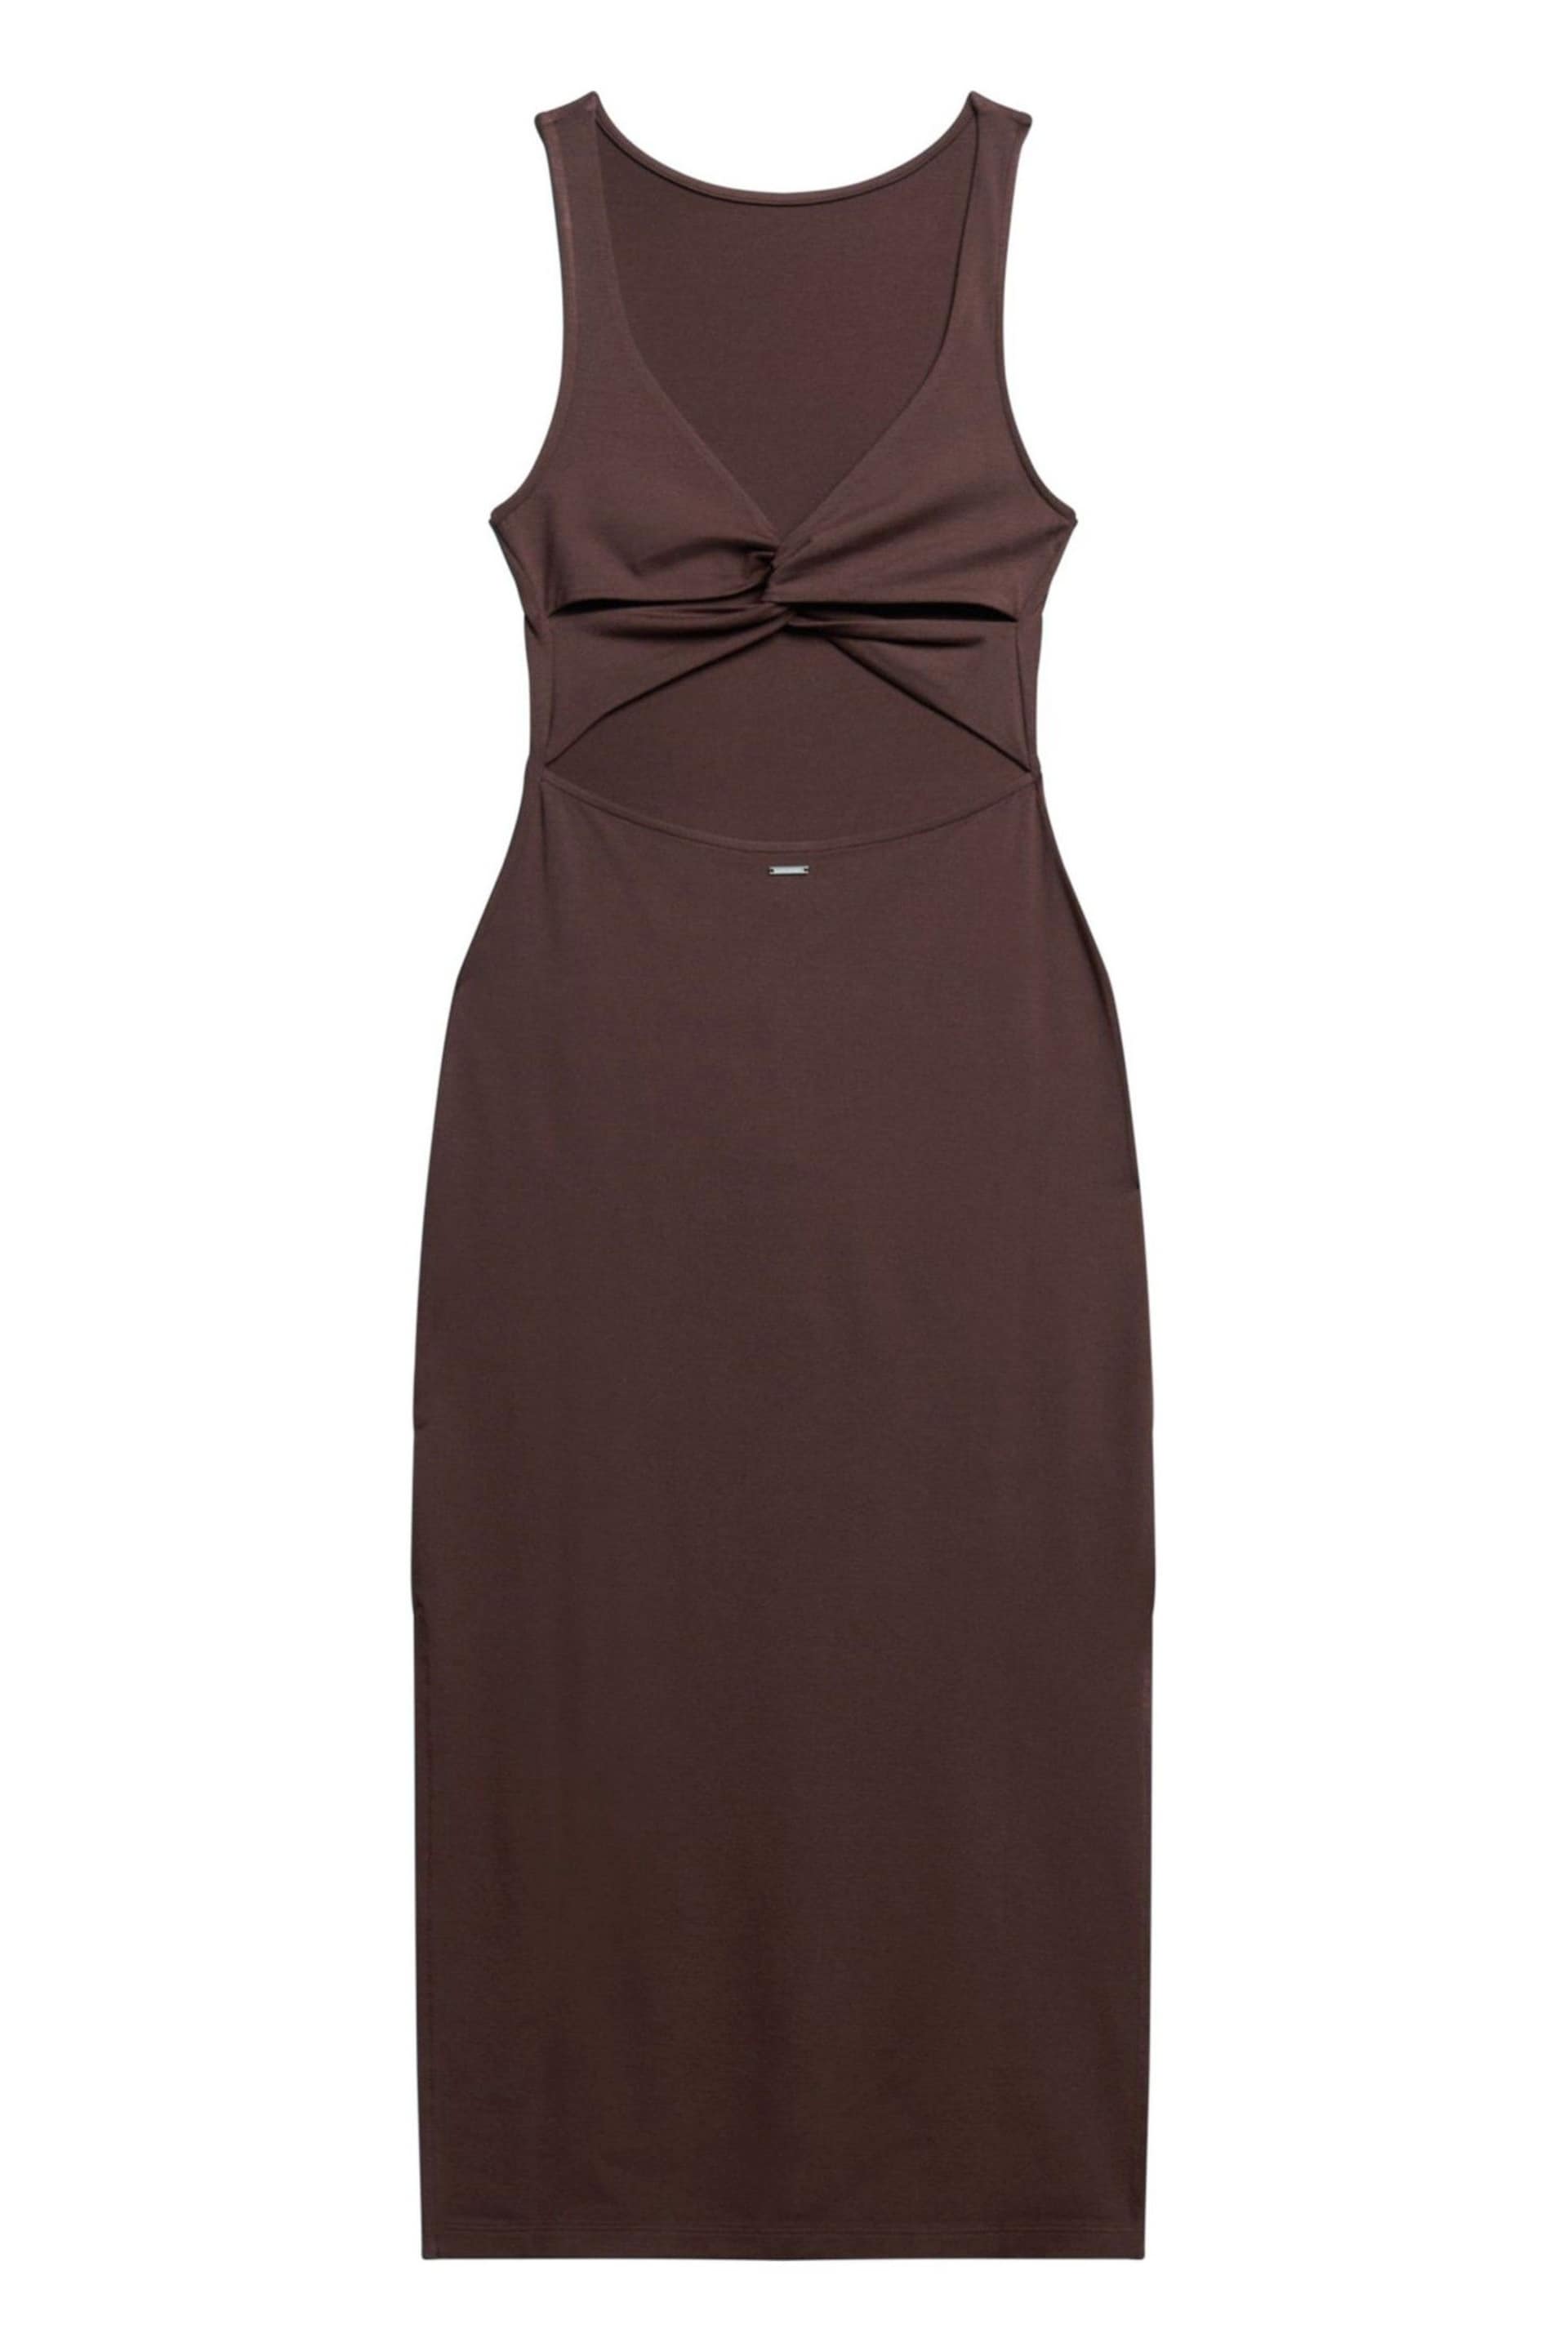 Superdry Brown Jersey Twist Back Midi Dress - Image 4 of 6